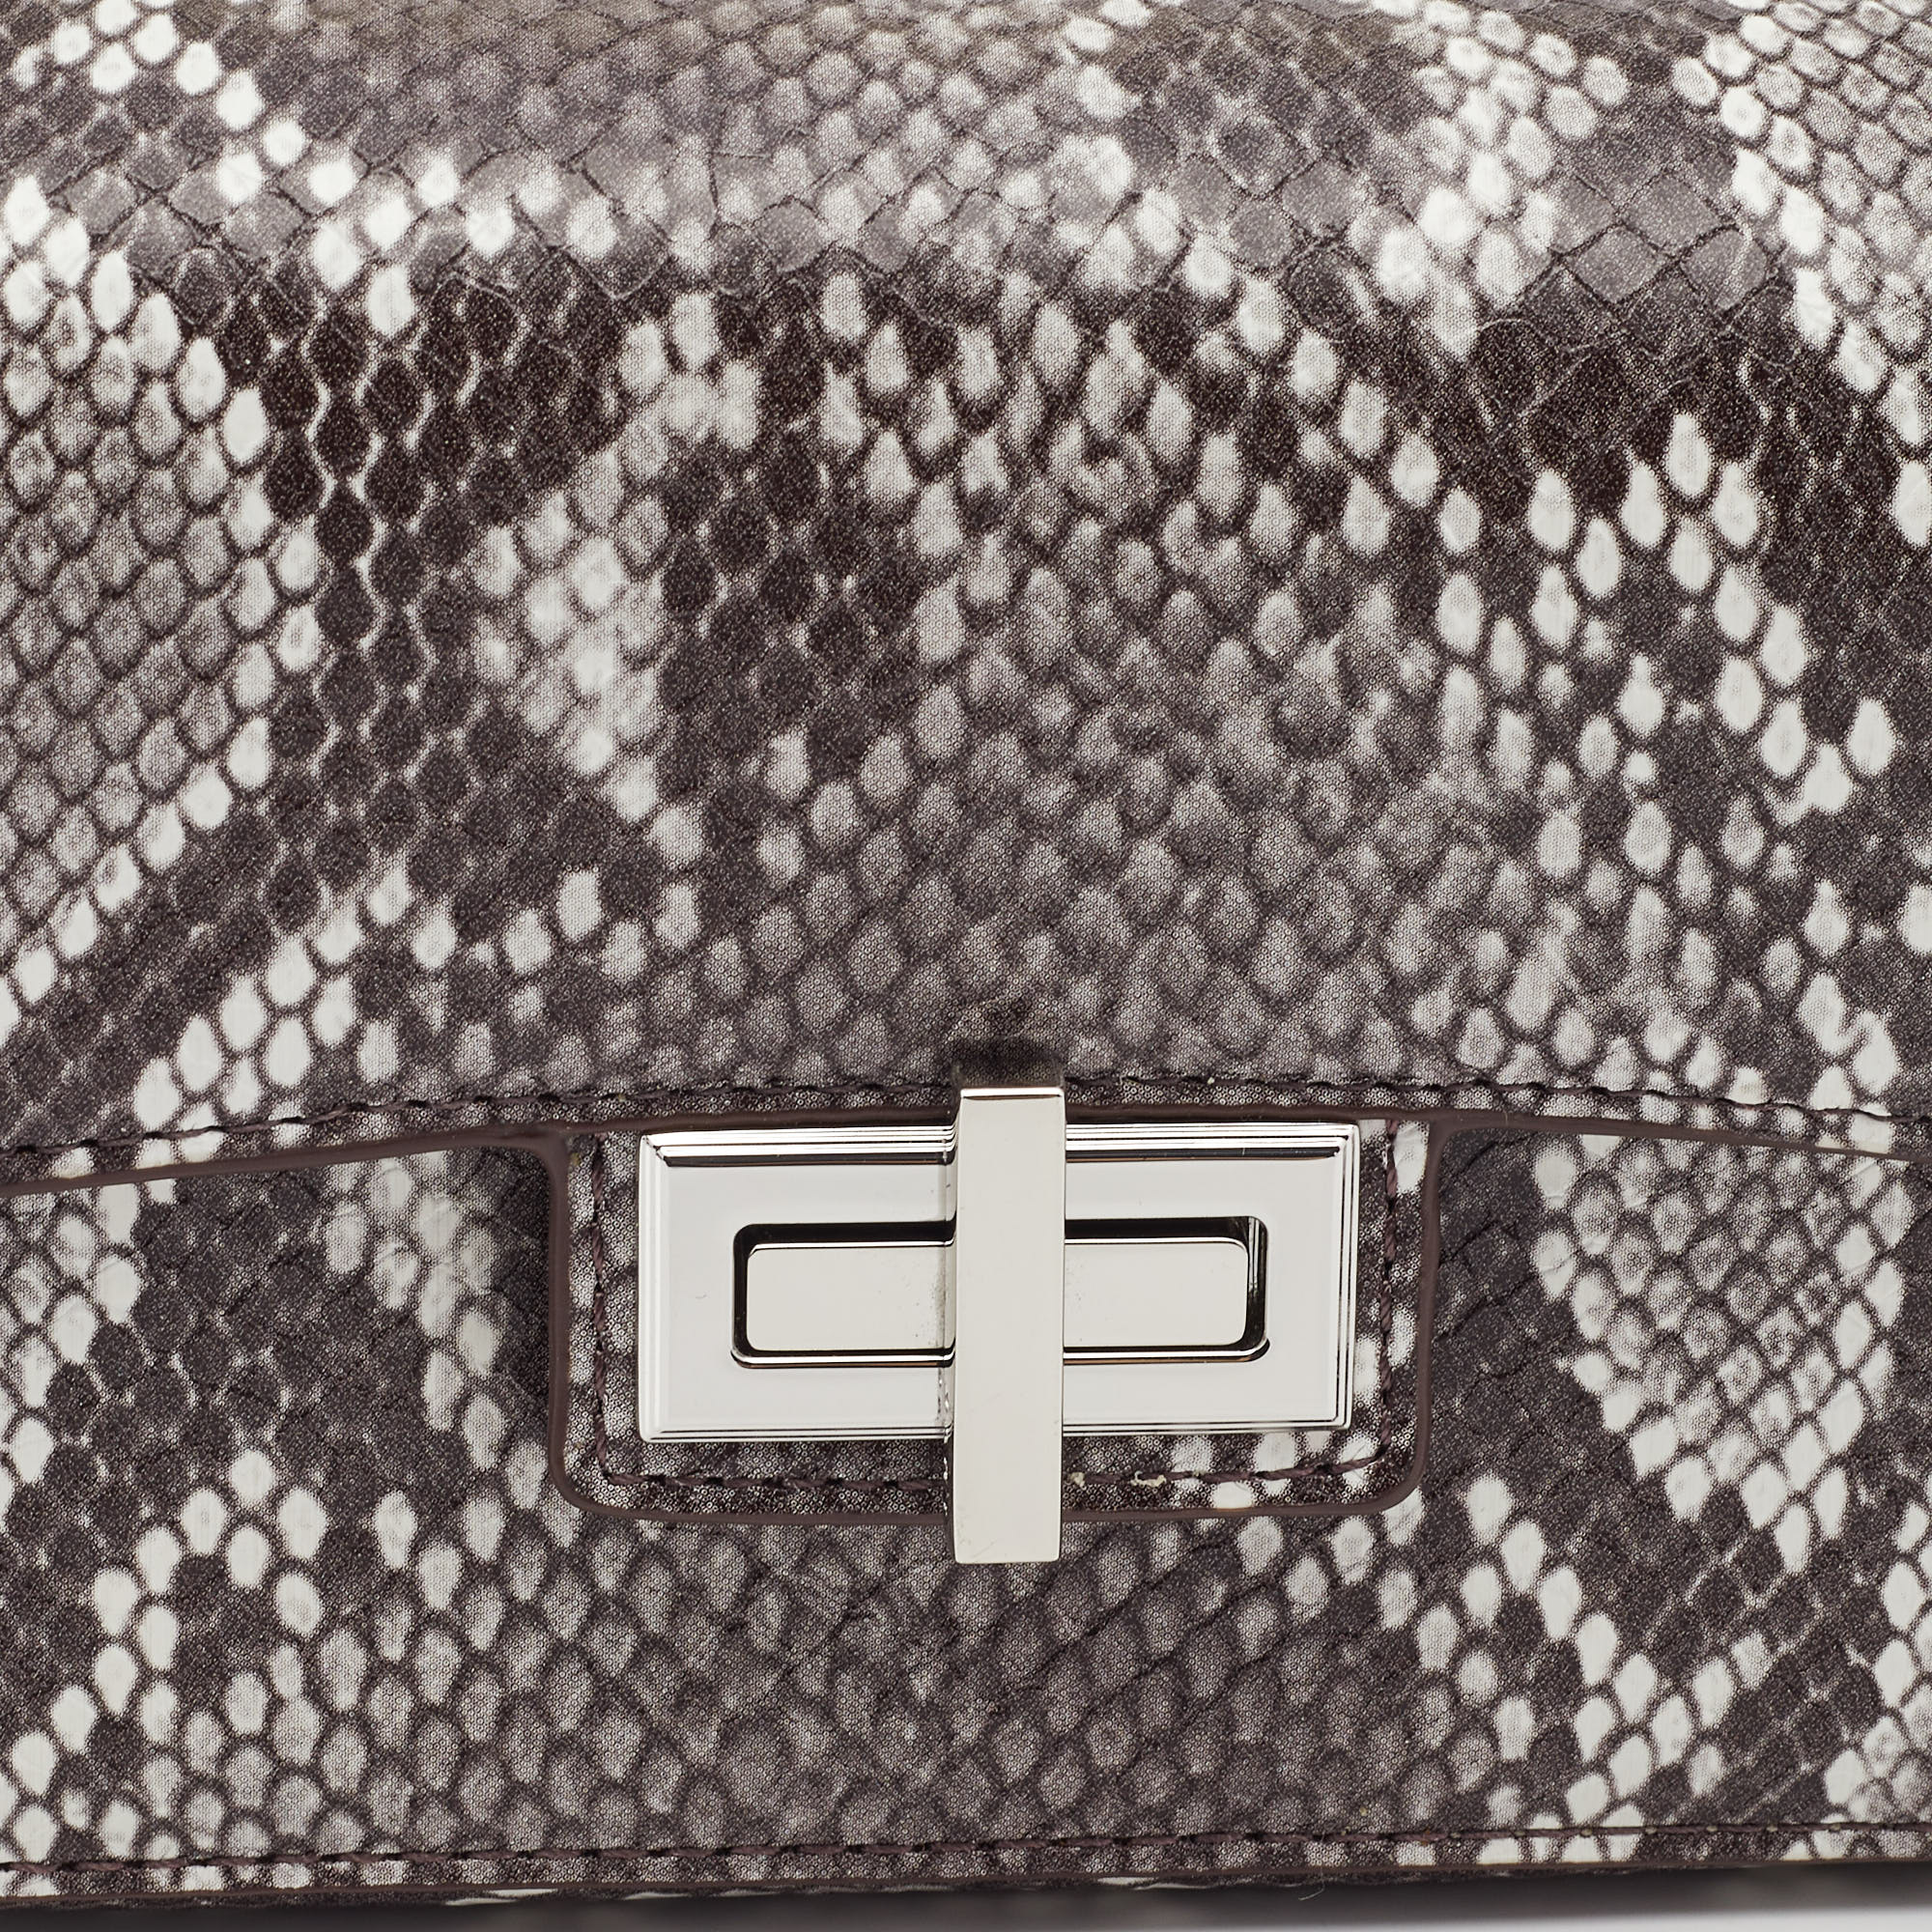 DKNY Grey/Black Python Embossed Leather Flap Crossbody Bag